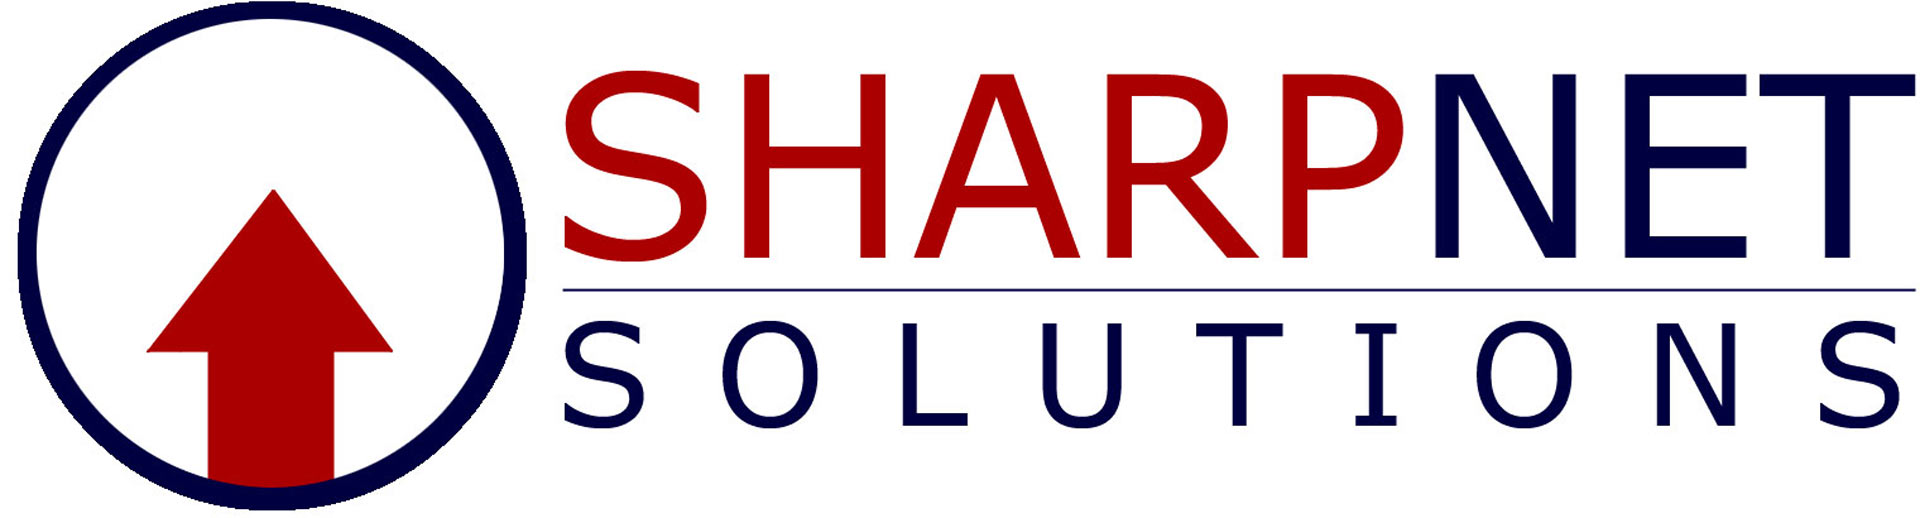 Best Online Marketing Agency Logo: SharpNet